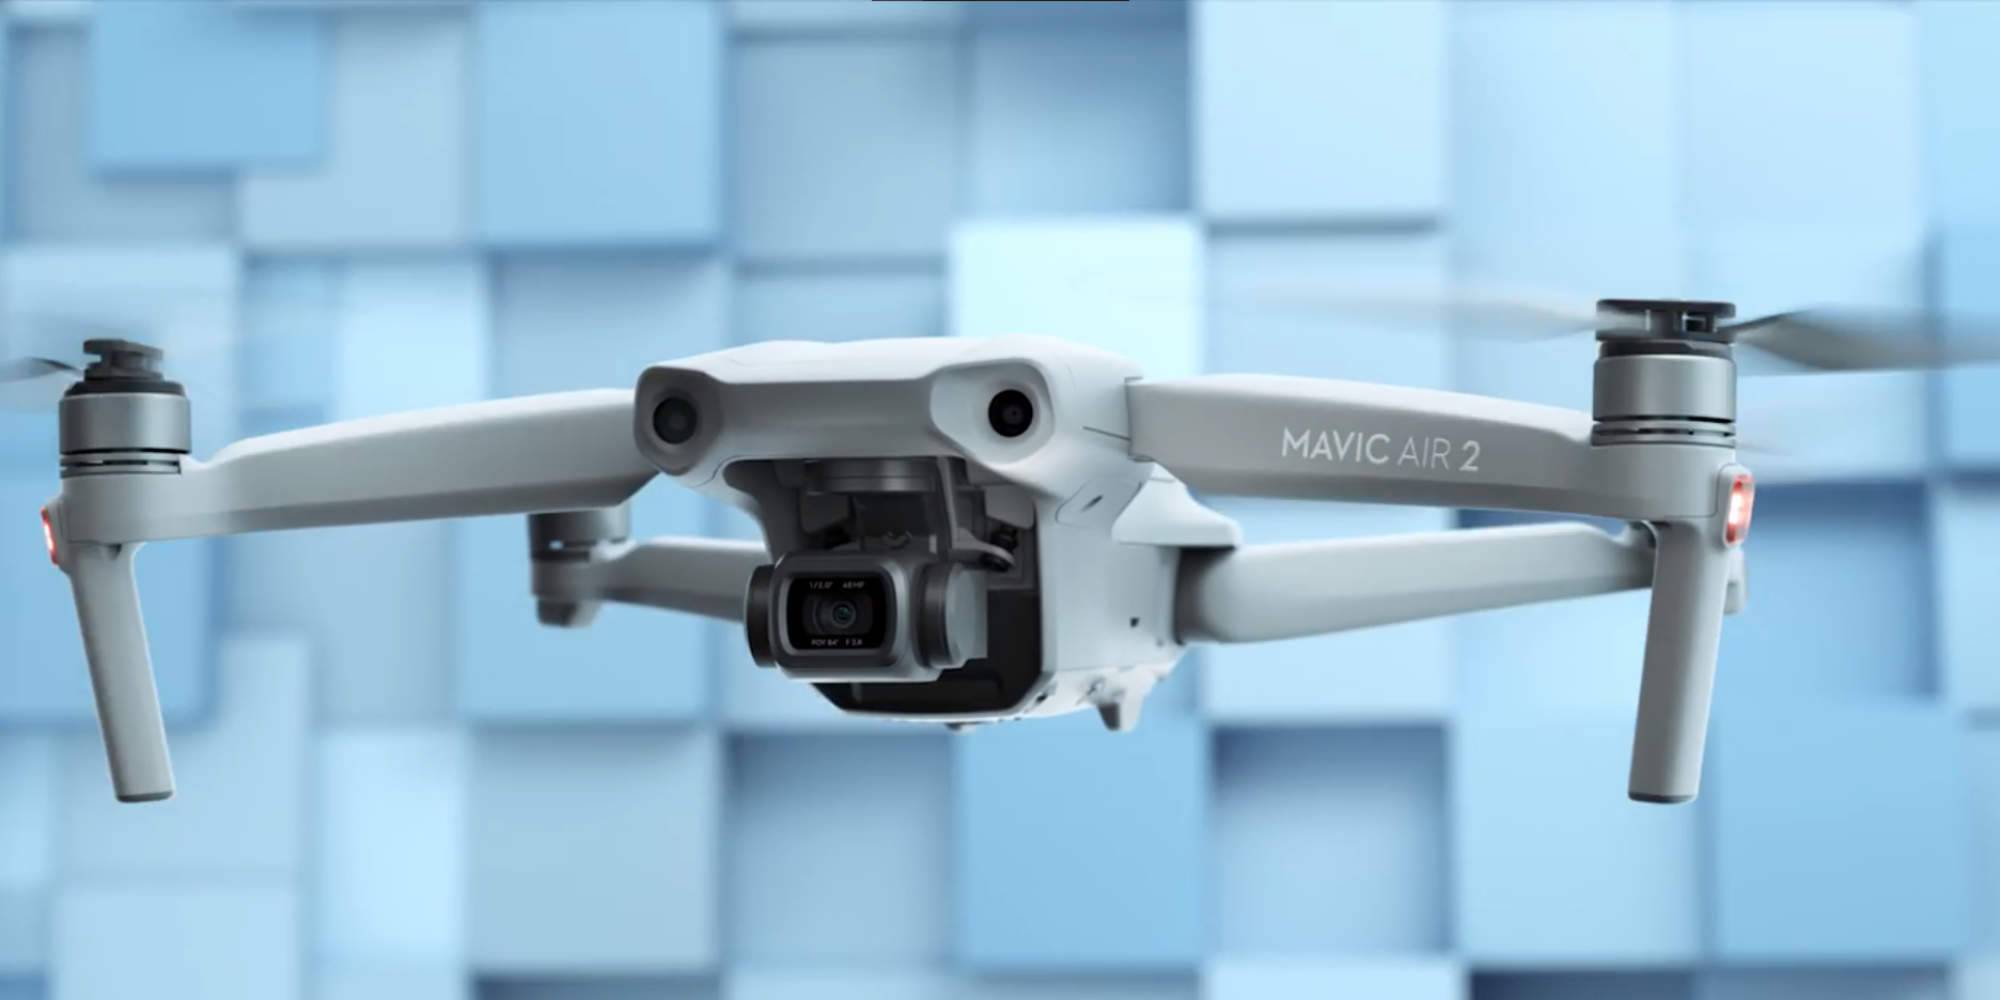 Last chance to save $199 on DJI Mavic Air 2 drone bundle